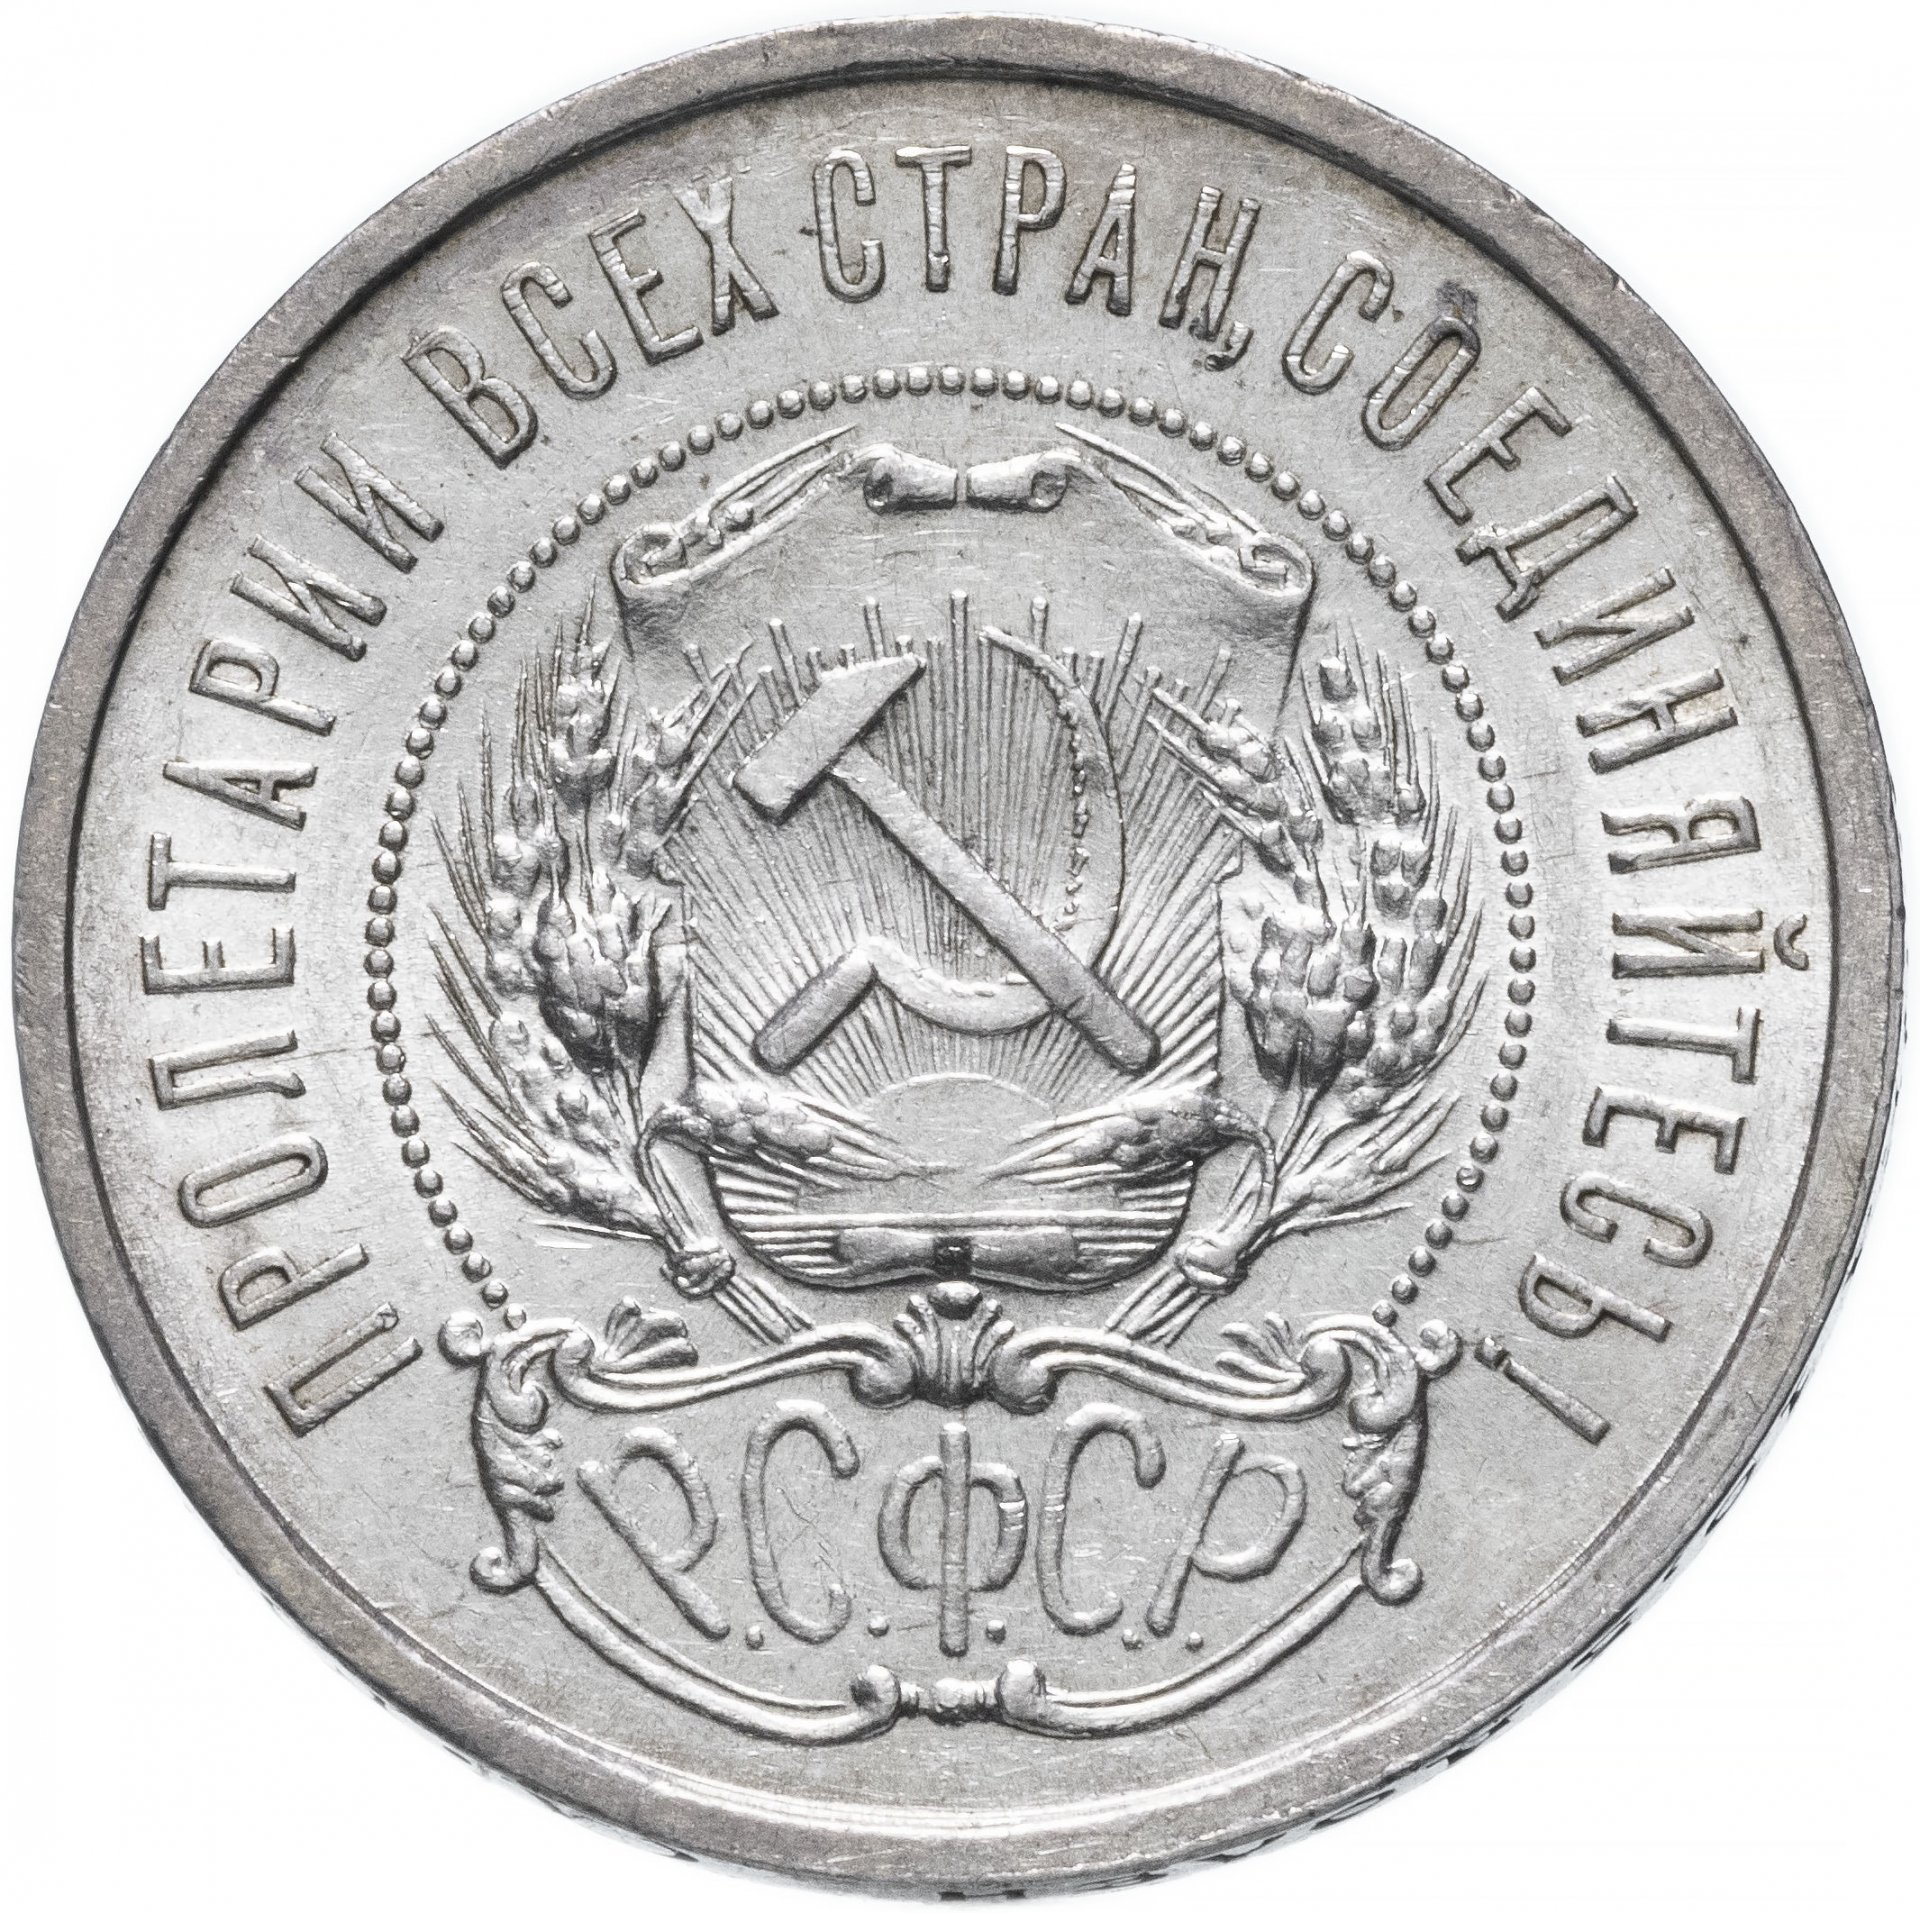 Монета 50 копеек года серебро. Полтинник серебро 1922. 50 Копеек 1922 серебро. 50 Серебро 1922г. 50 Копеек 1922 полтинник серебро.